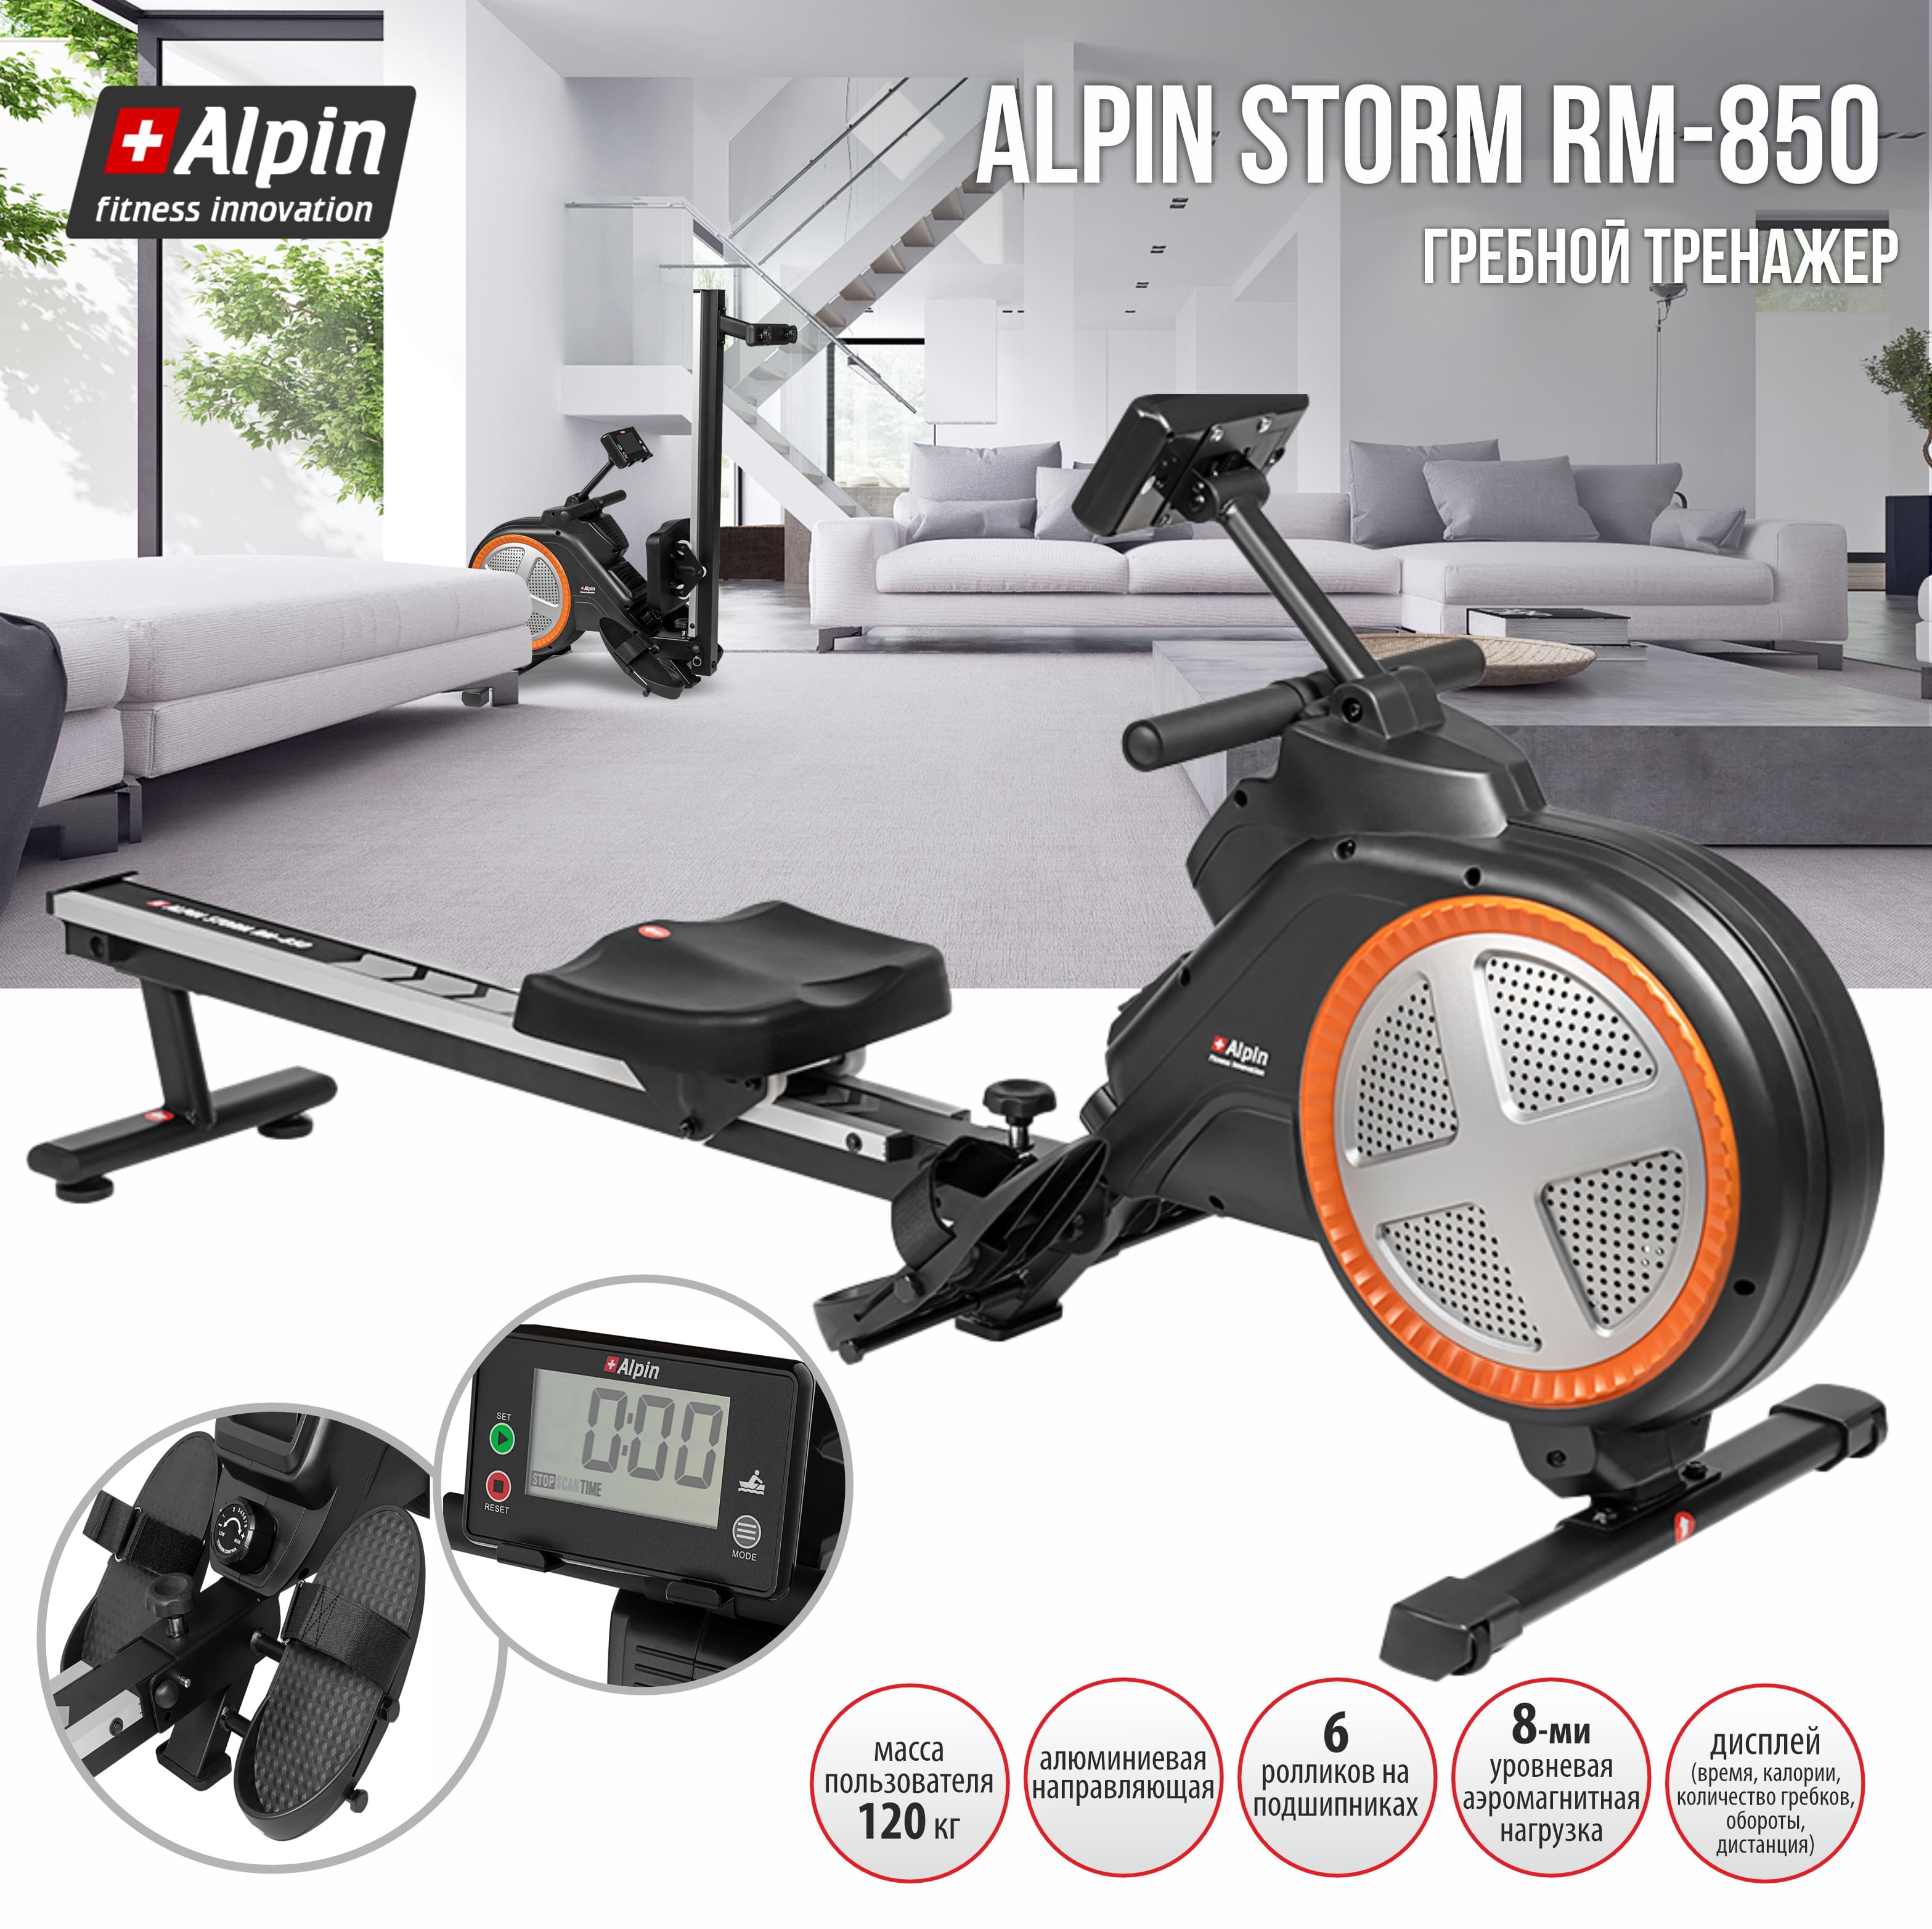 Alpin Storm RM-850